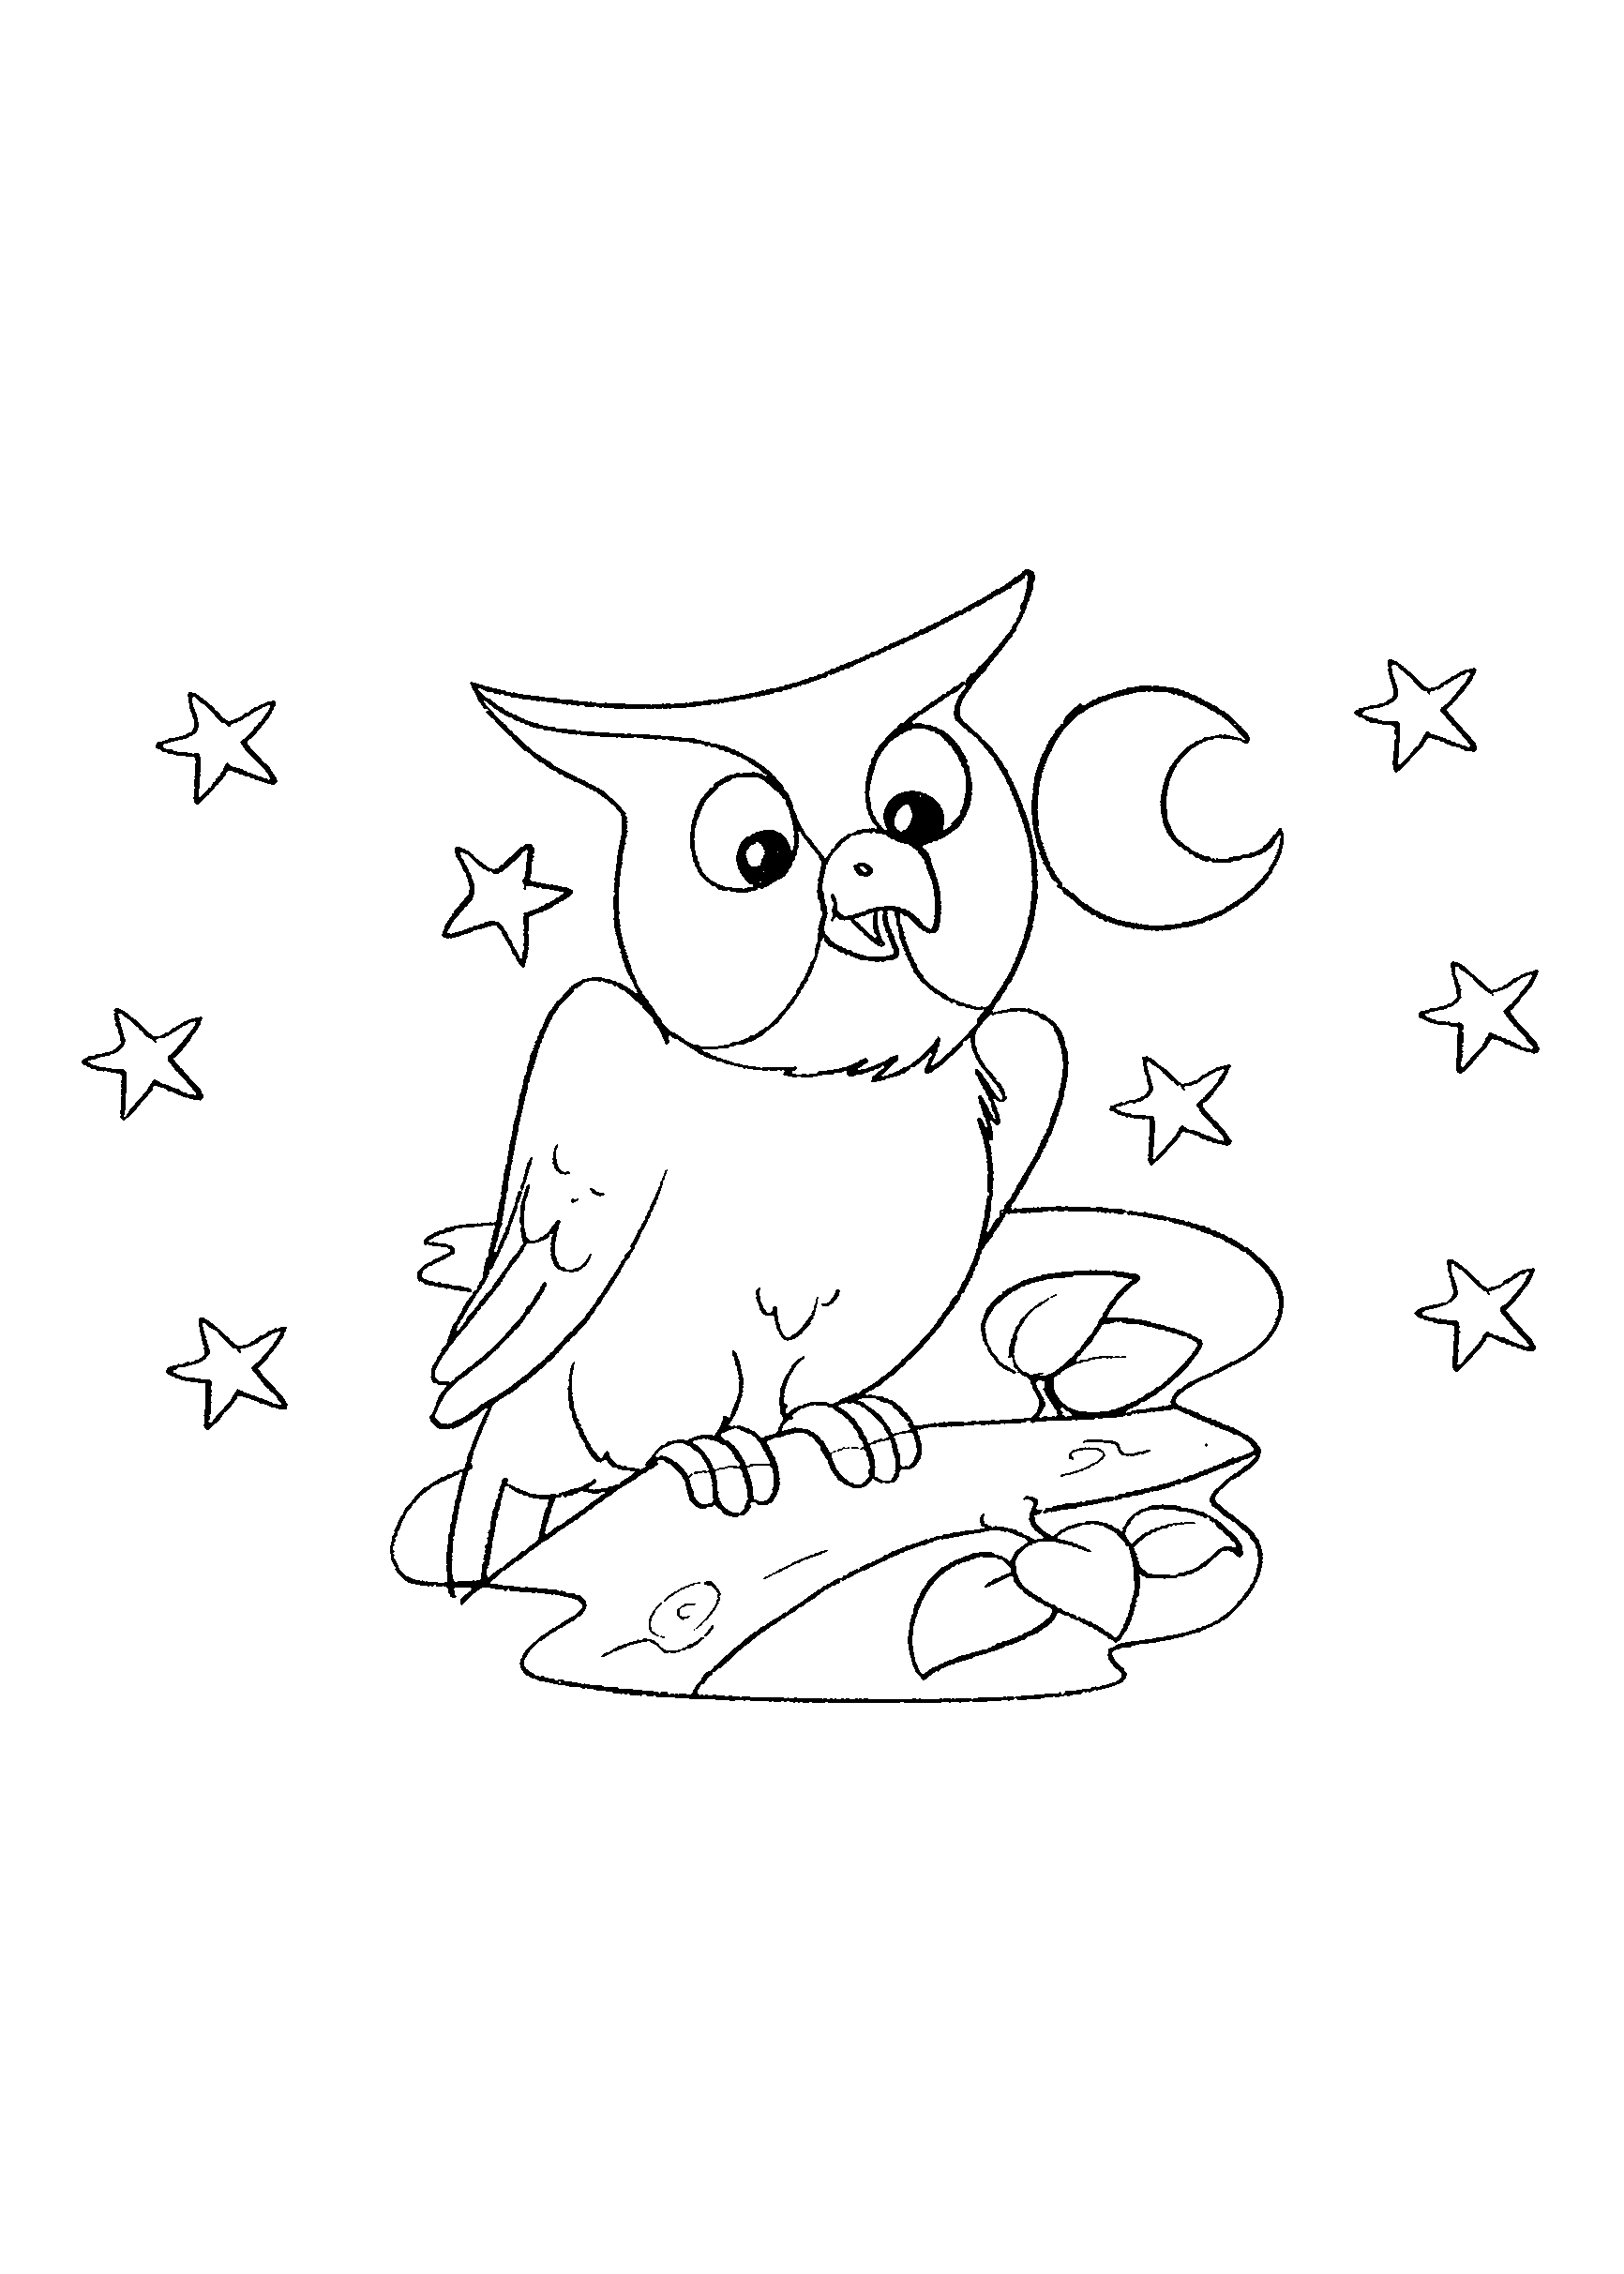 Desenho de coruja na noite